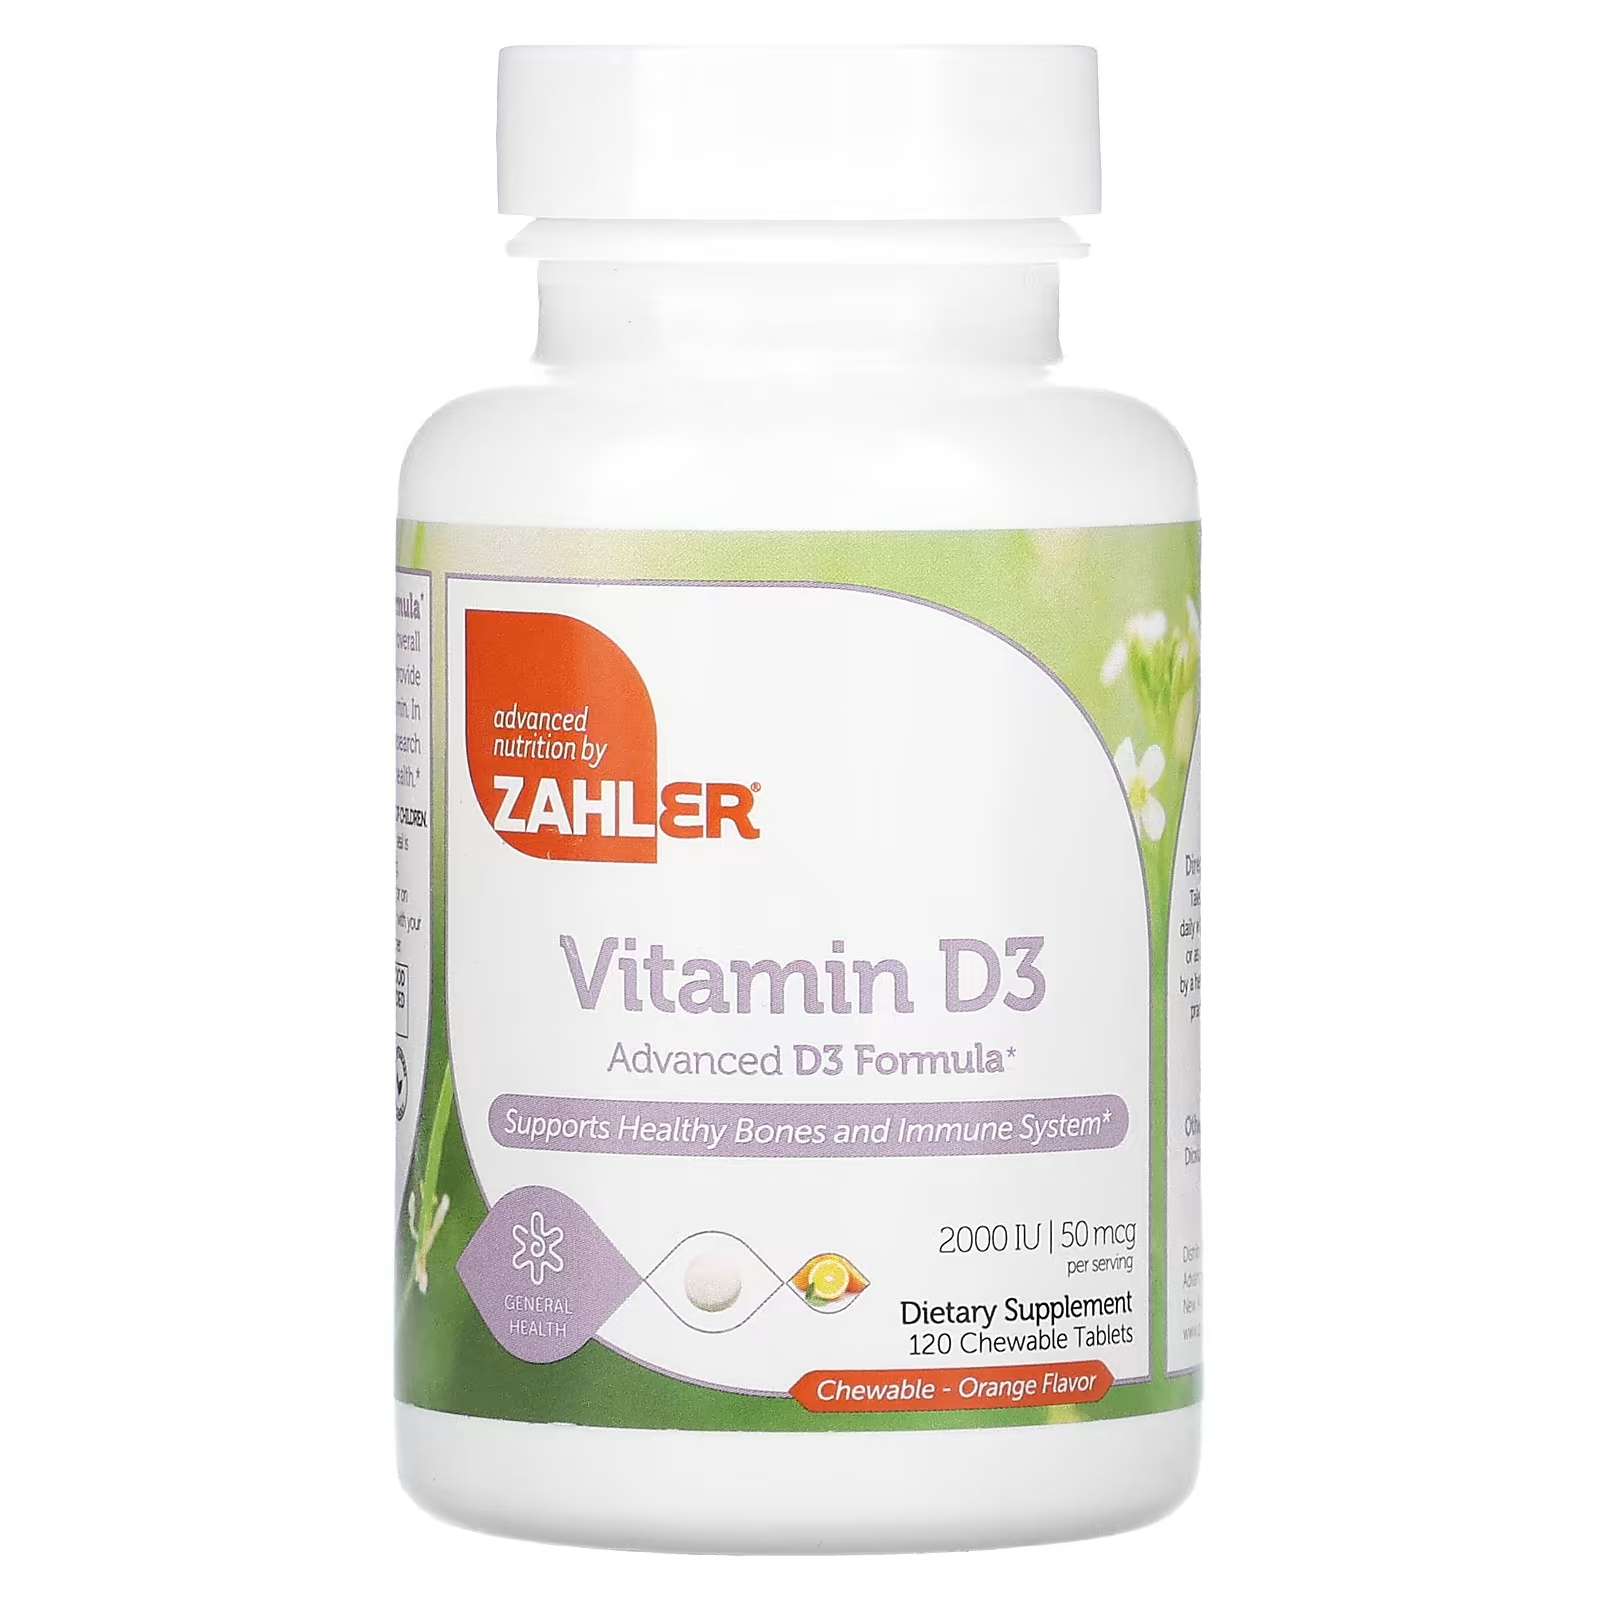 Витамин D3 Zahler апельсин 50 мкг 2000 МЕ, 120 таблеток витамин d3 zahler 2000 ме 250 таблеток